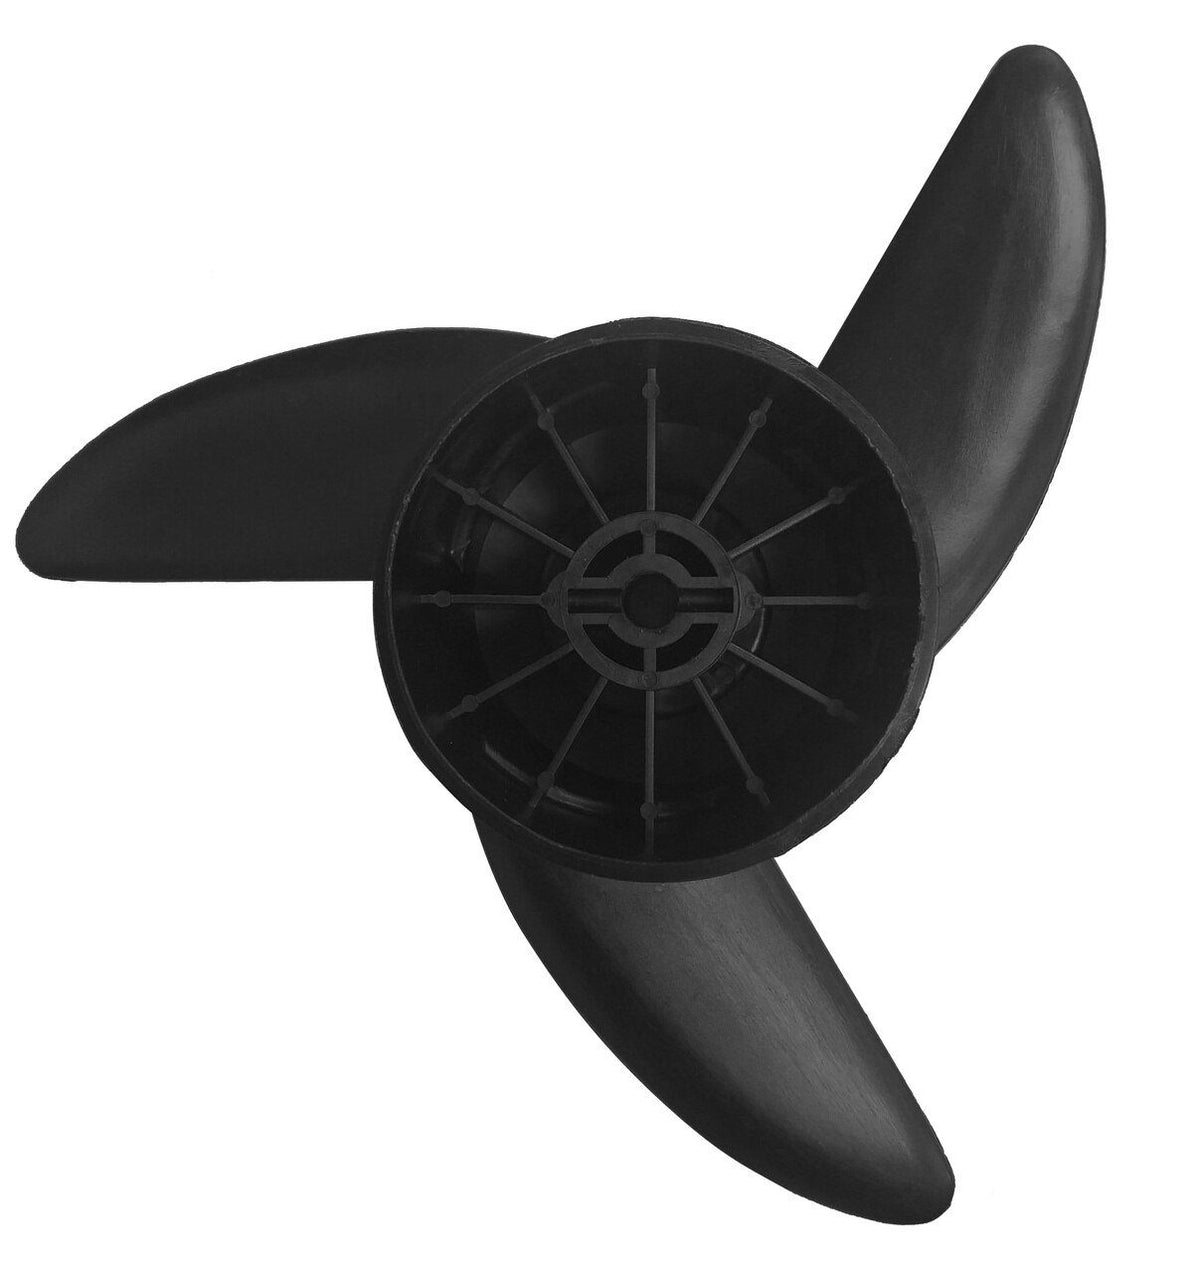 Trolling Motor Propeller - 3 Blade